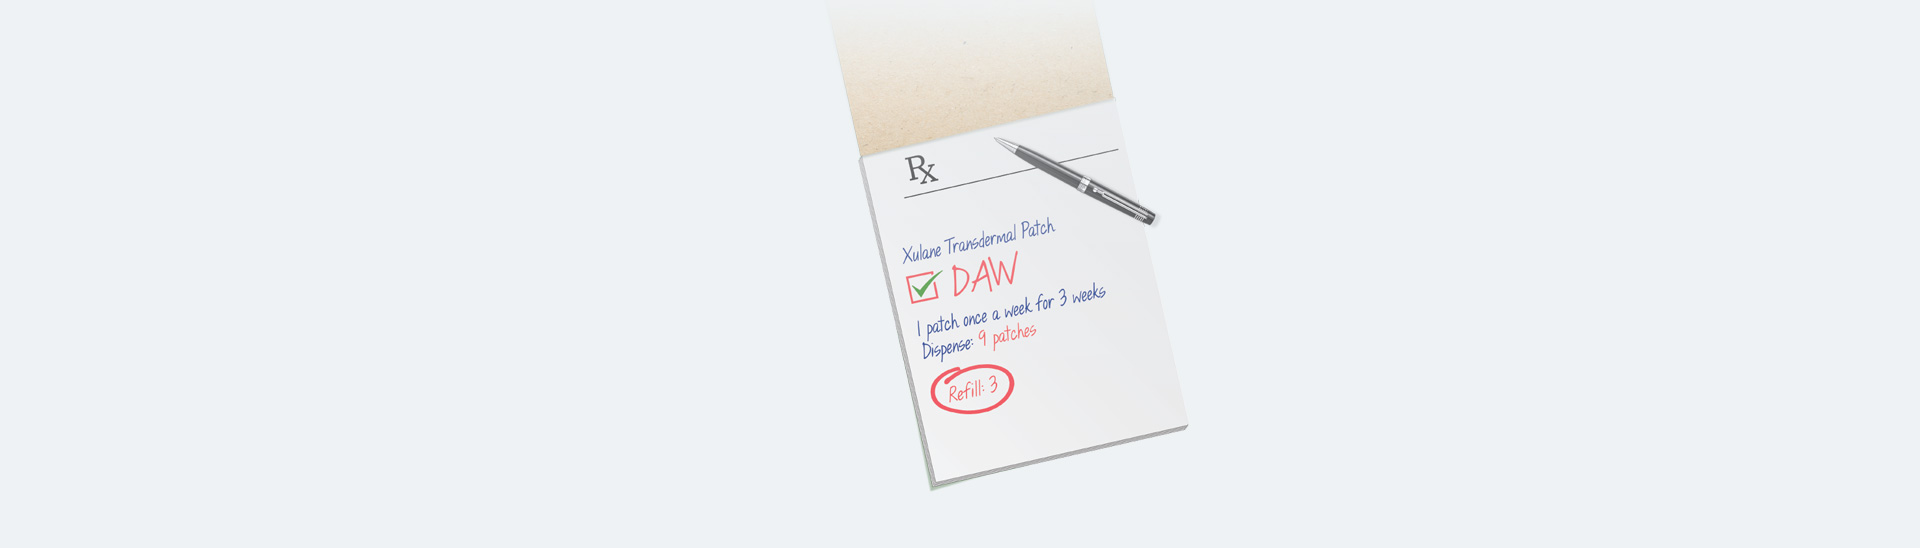 Prescription pad showing Dispense As Written (DAW) check box, with 3 refills